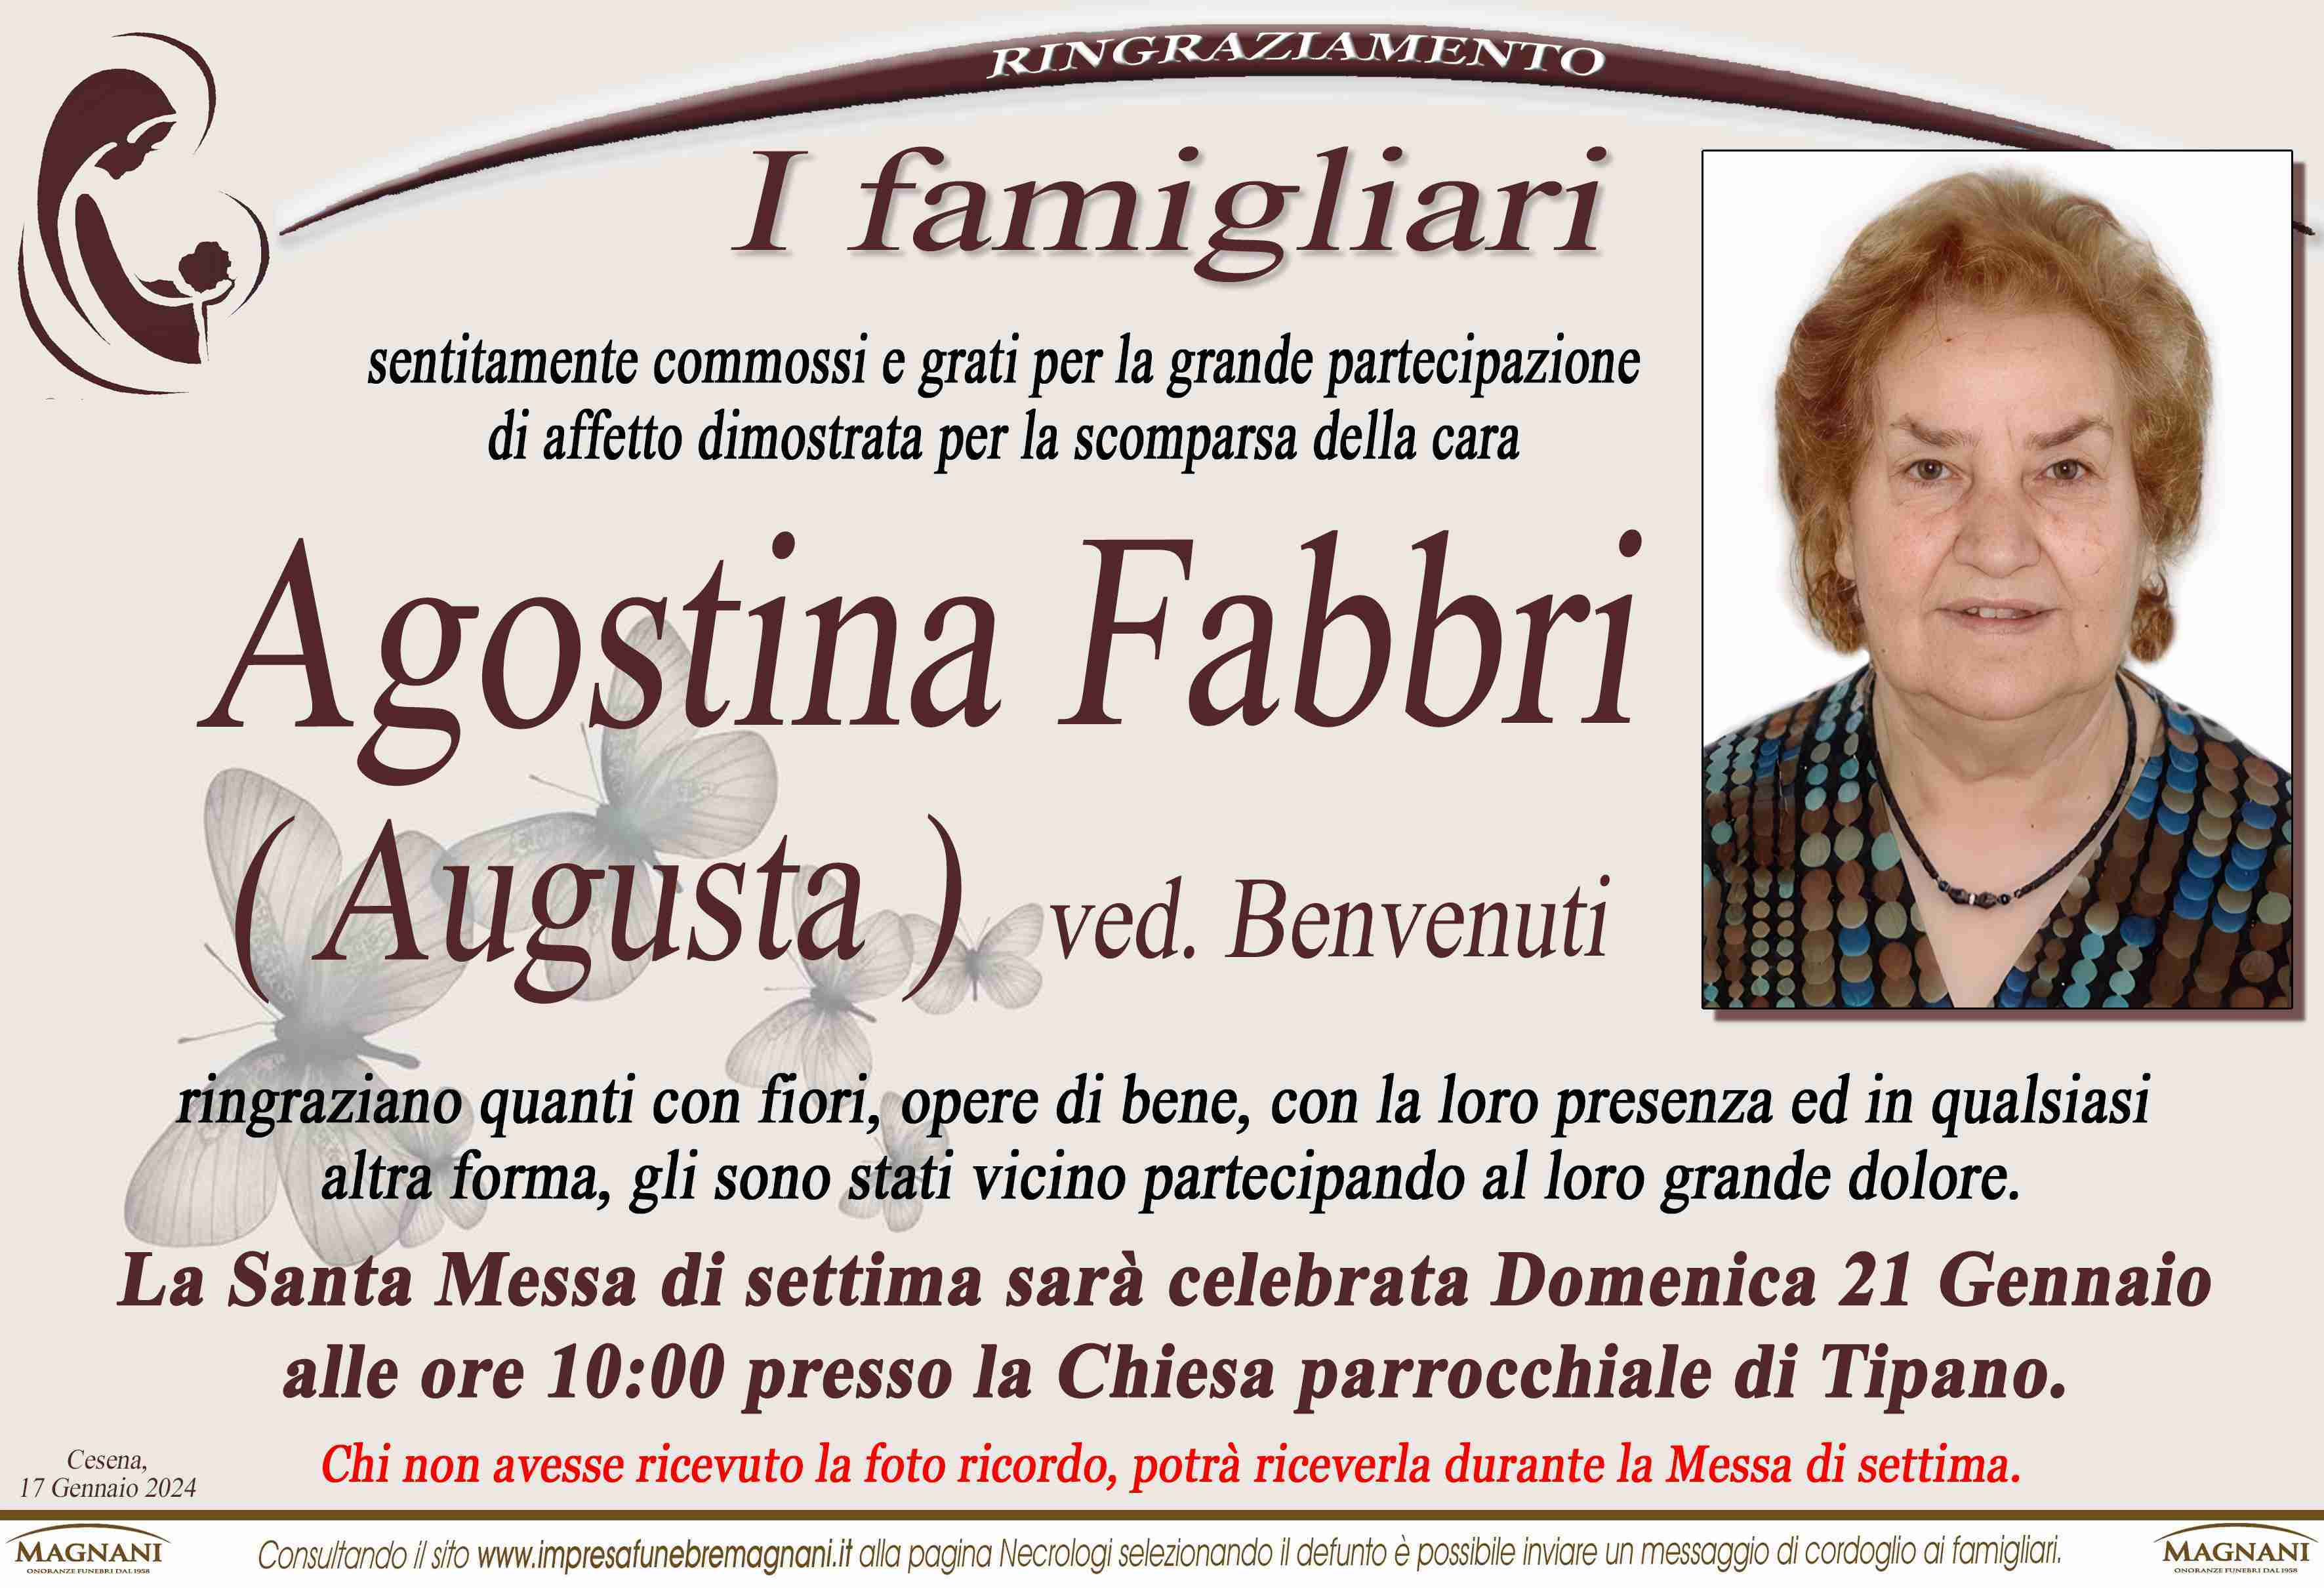 Agostina Fabbri